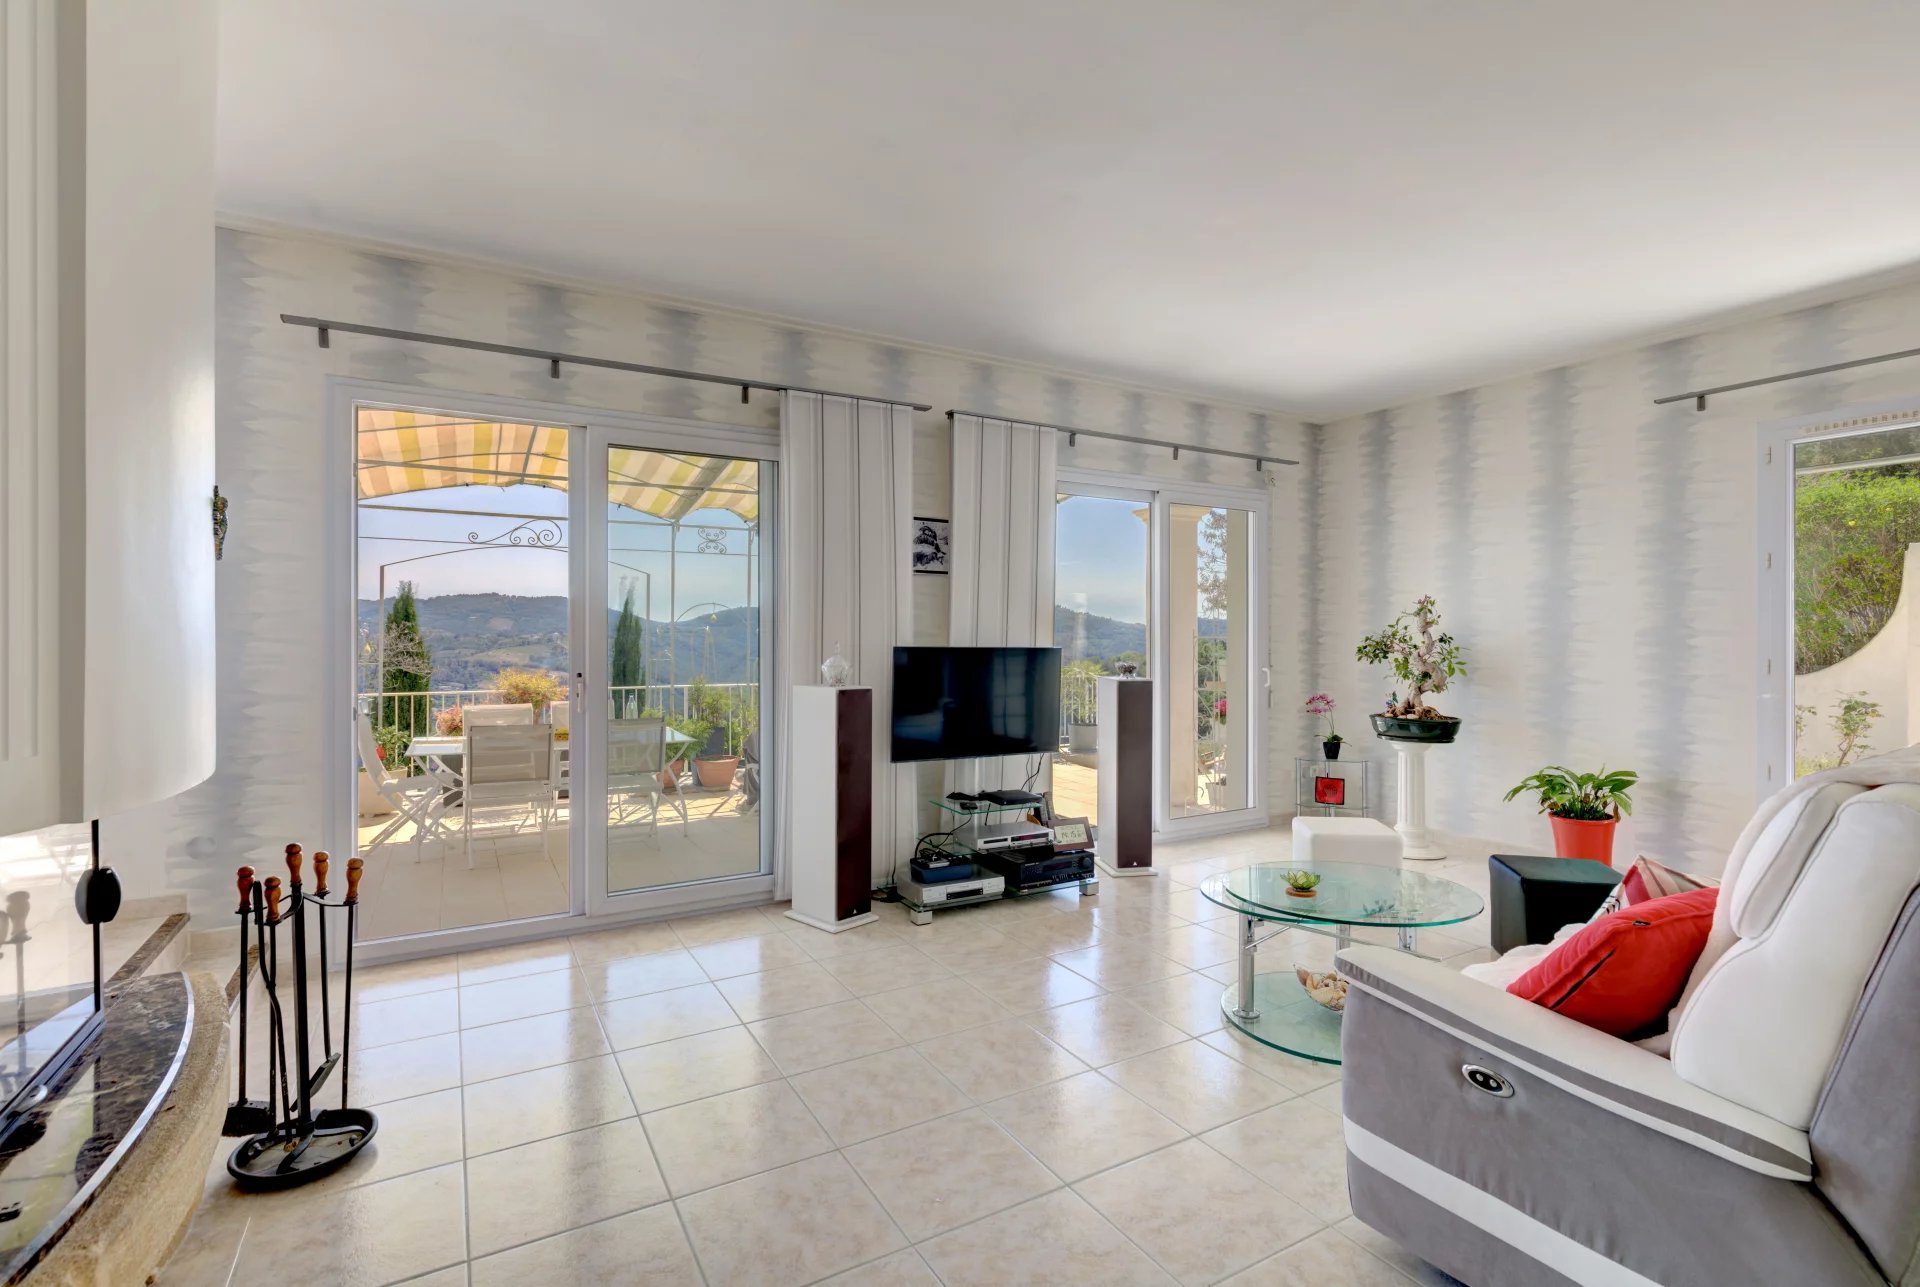 4/5 bedroom villa with "Wow" views